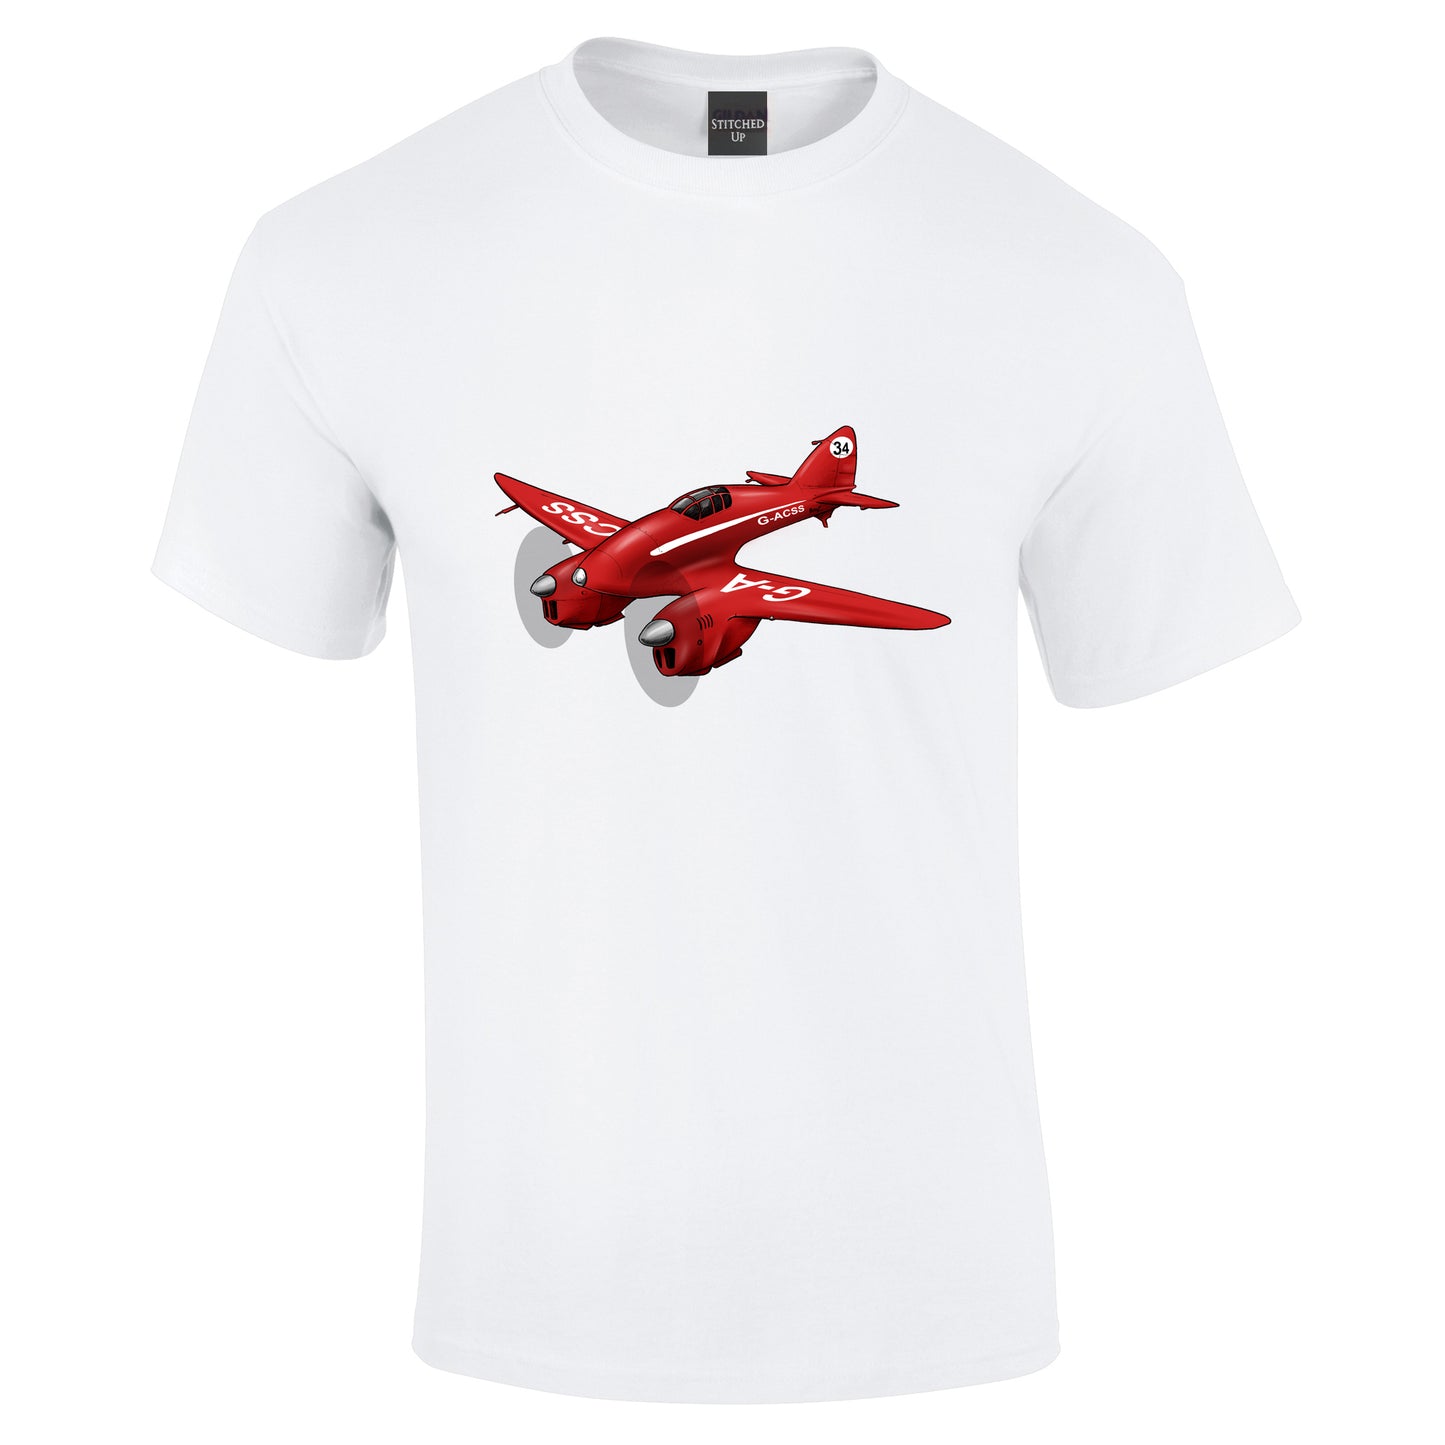 The Comet Racer Aircraft T-Shirt